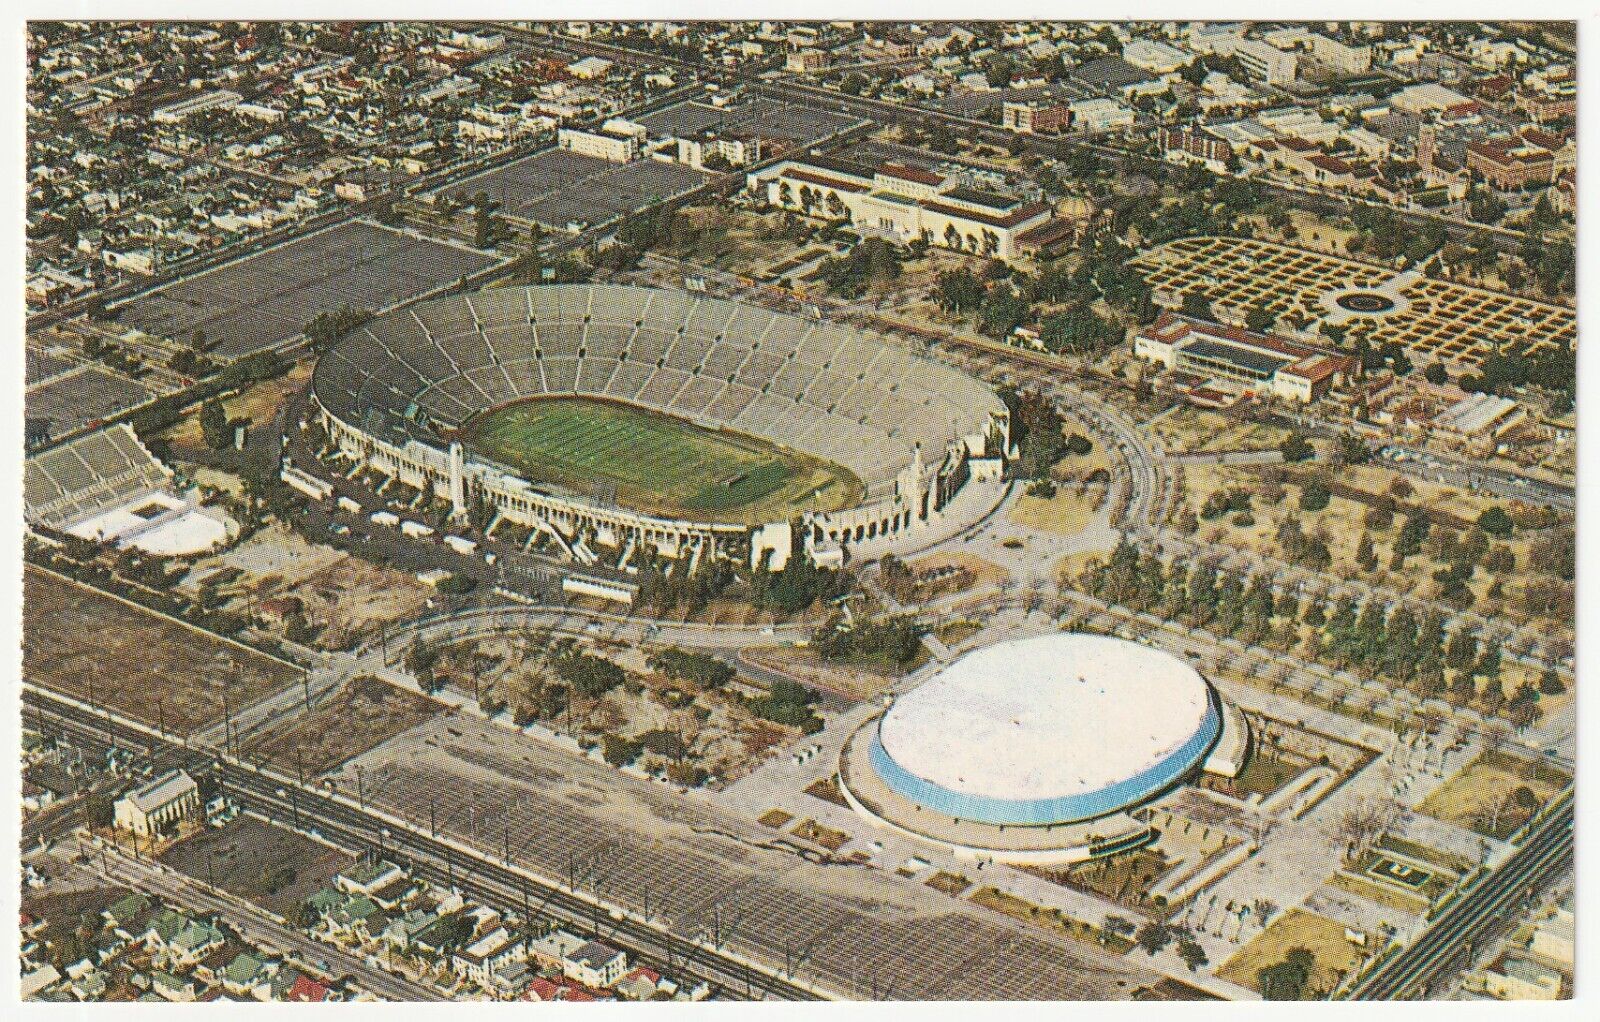 Los Angeles Coliseum, Home of the L.A. Dodgers 1958-61 Baseball Stadium Postcard